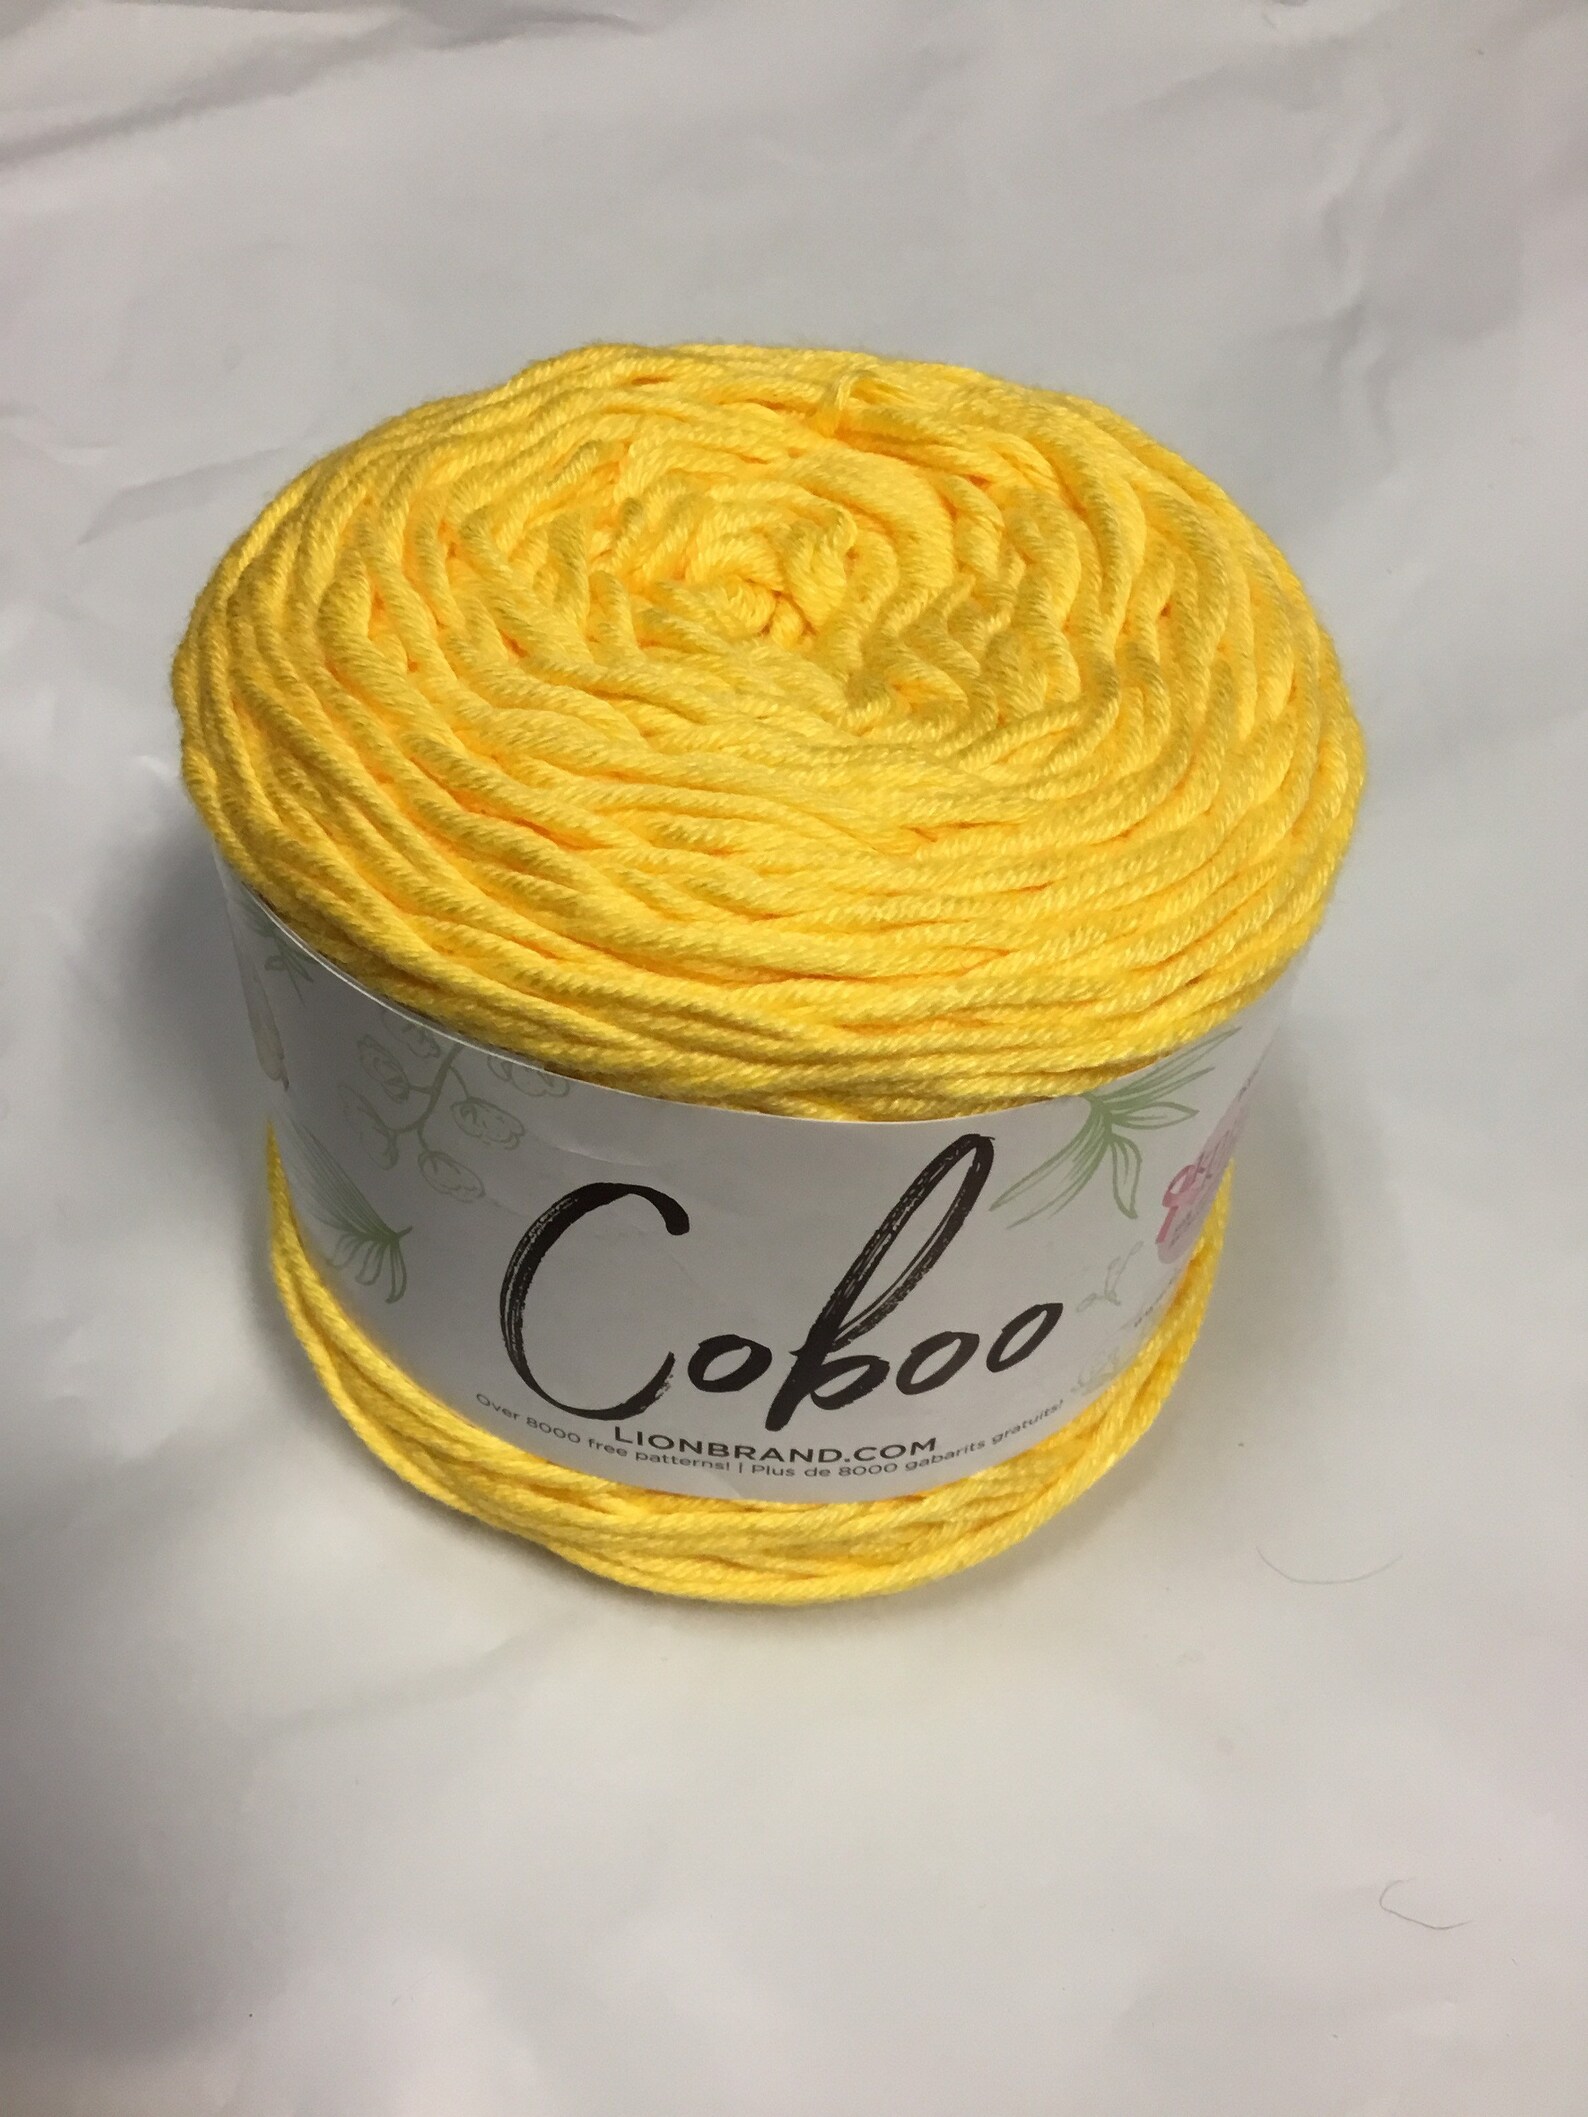 Lion Brand Coboo yarn mixture of cotton & Rayon yarn 232yd / | Etsy